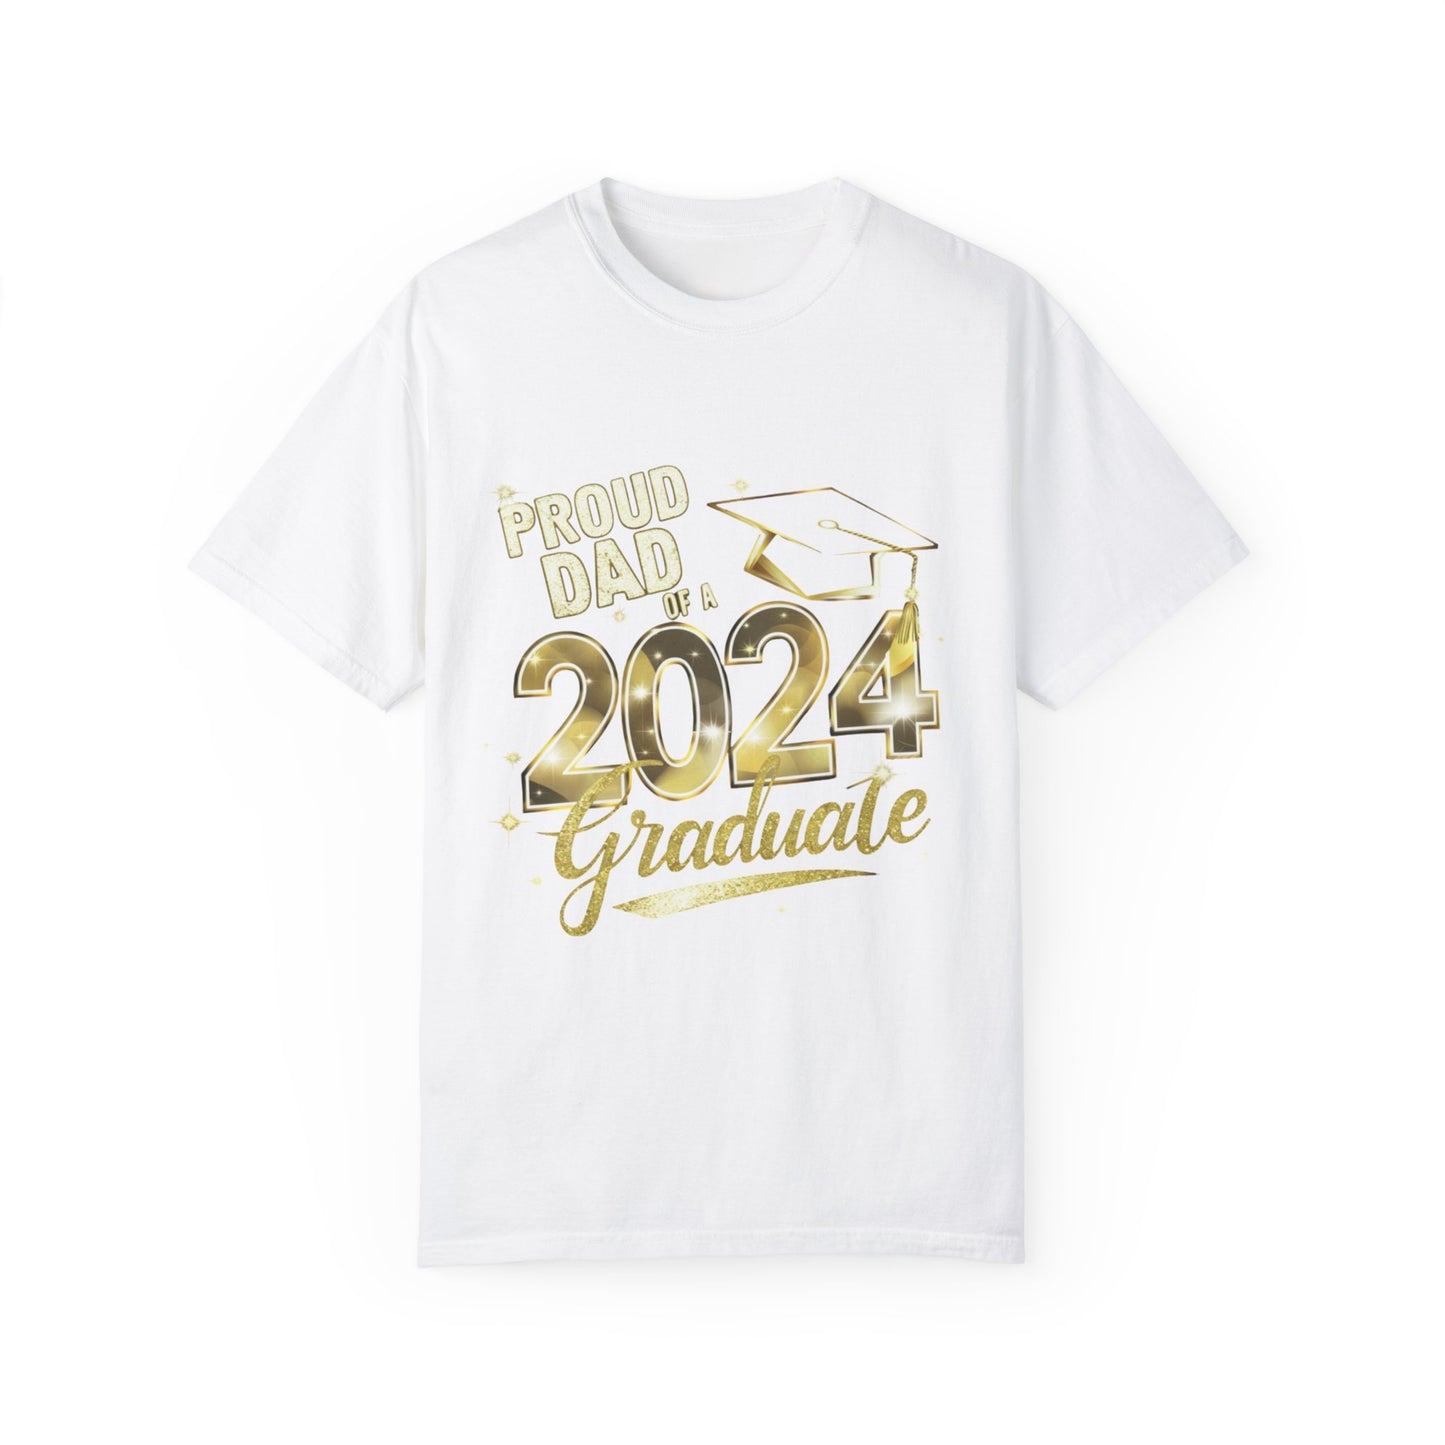 Proud of Dad 2024 Graduate Unisex Garment-dyed T-shirt Cotton Funny Humorous Graphic Soft Premium Unisex Men Women White T-shirt Birthday Gift-3